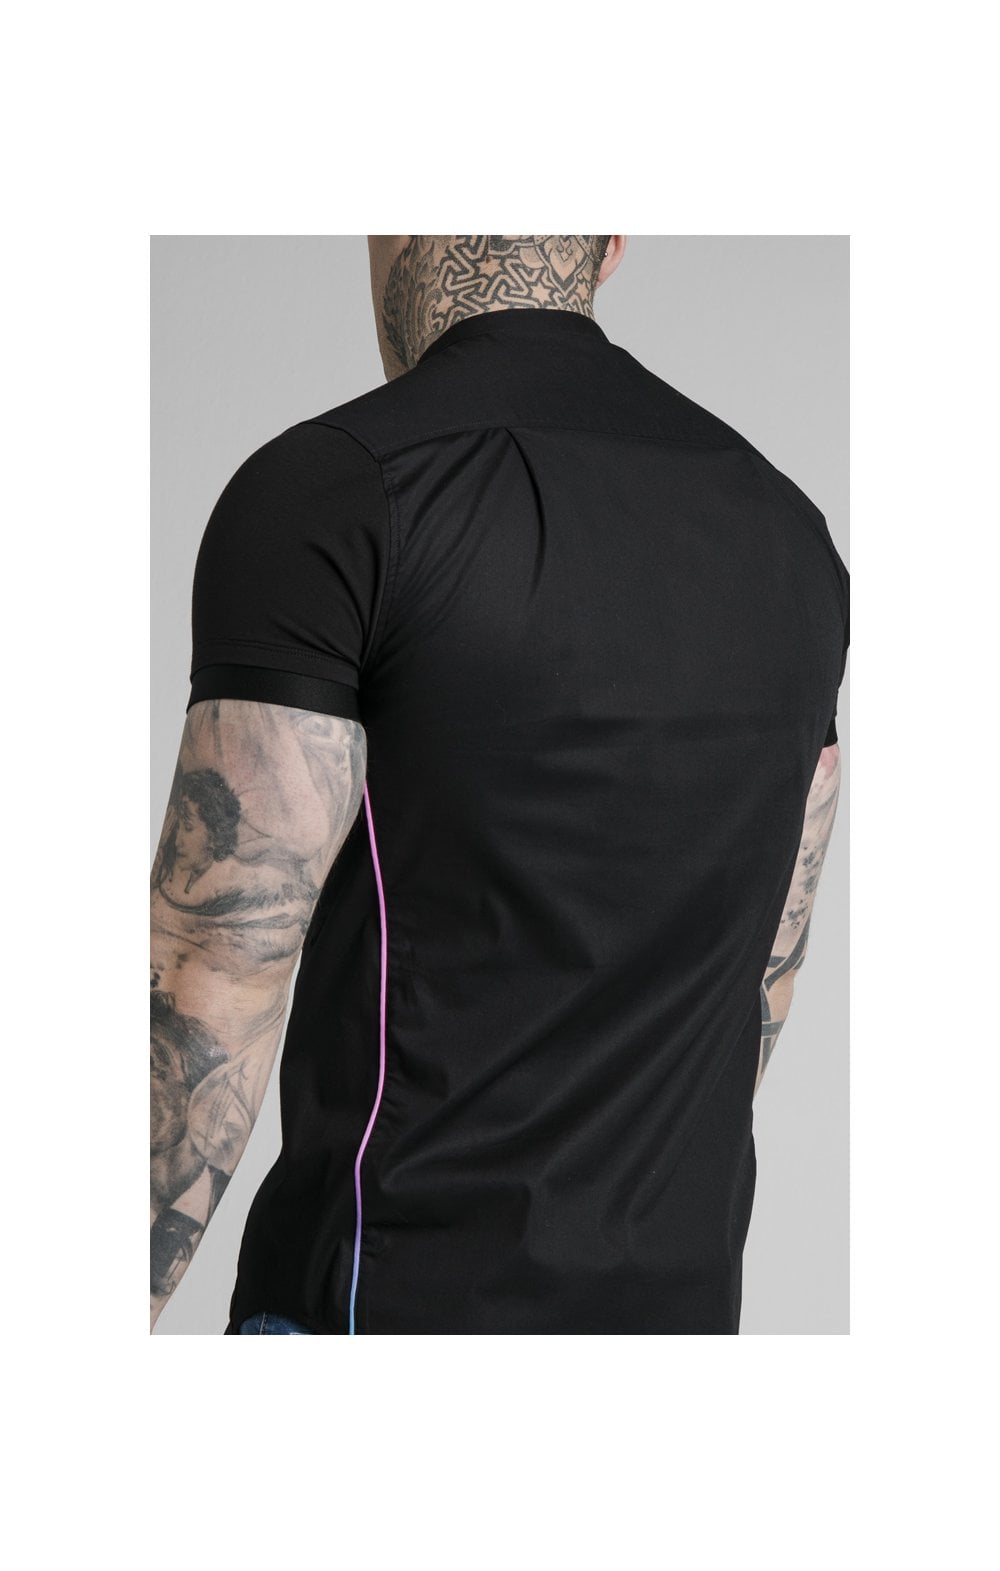 SikSilk S/S Fade Grandad Shirt - Black & Neon Fade (2)